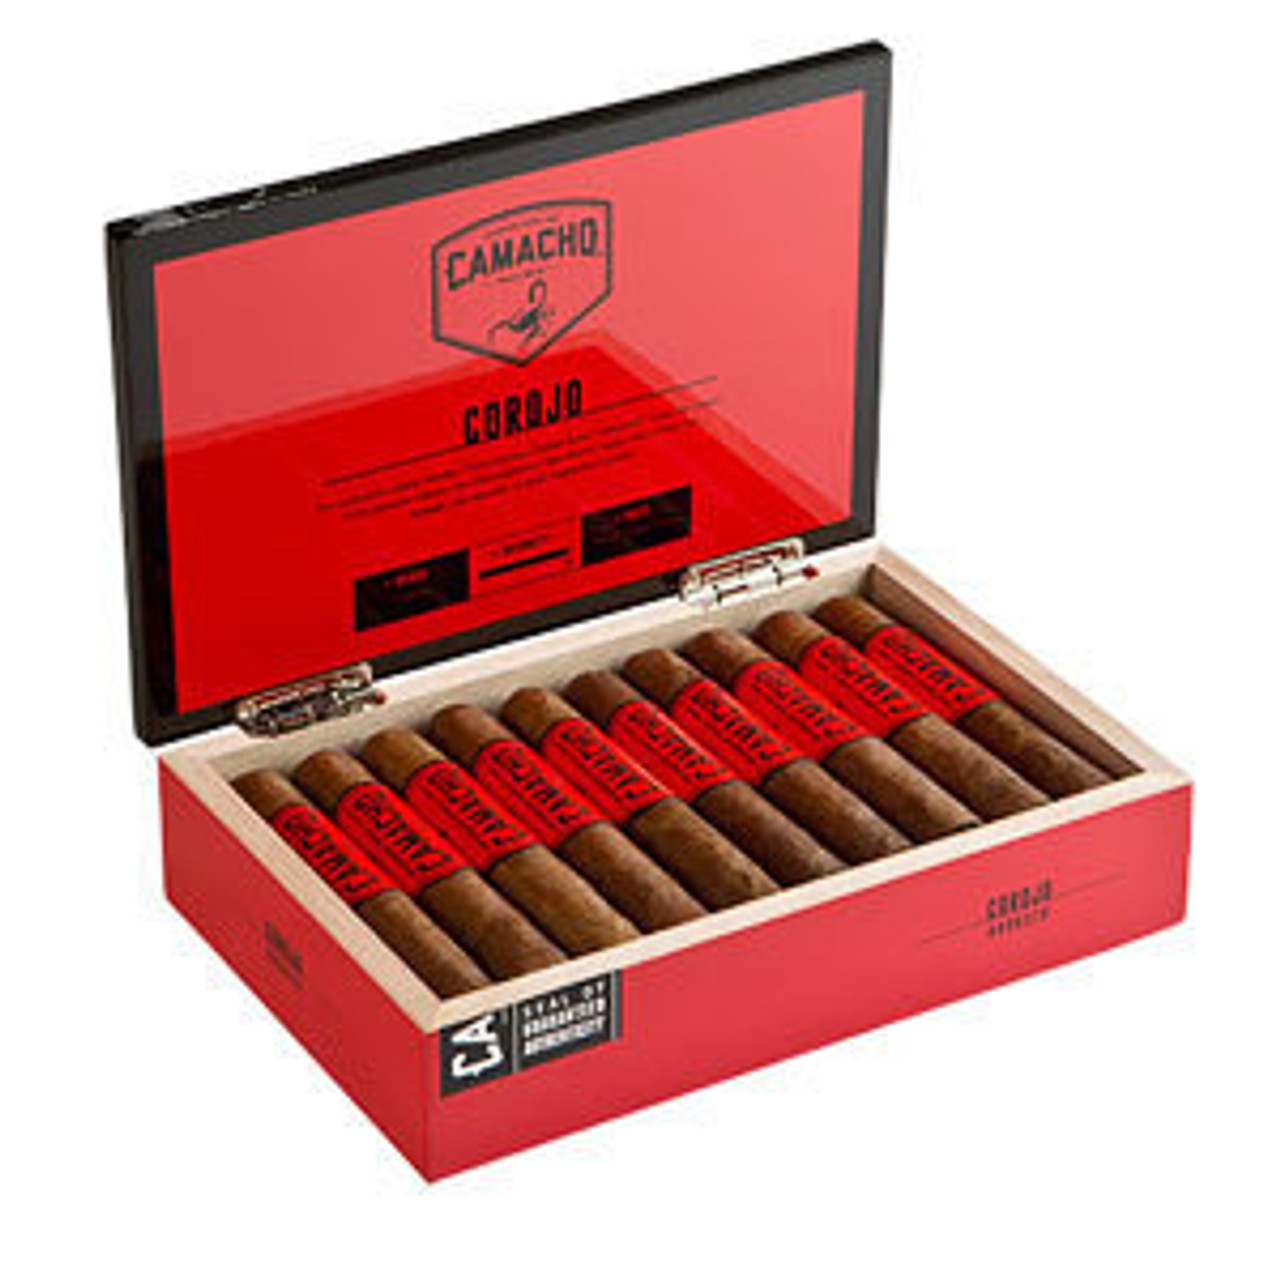 Camacho Corojo Toro Cigars - 6 x 50 (Box of 20) Open